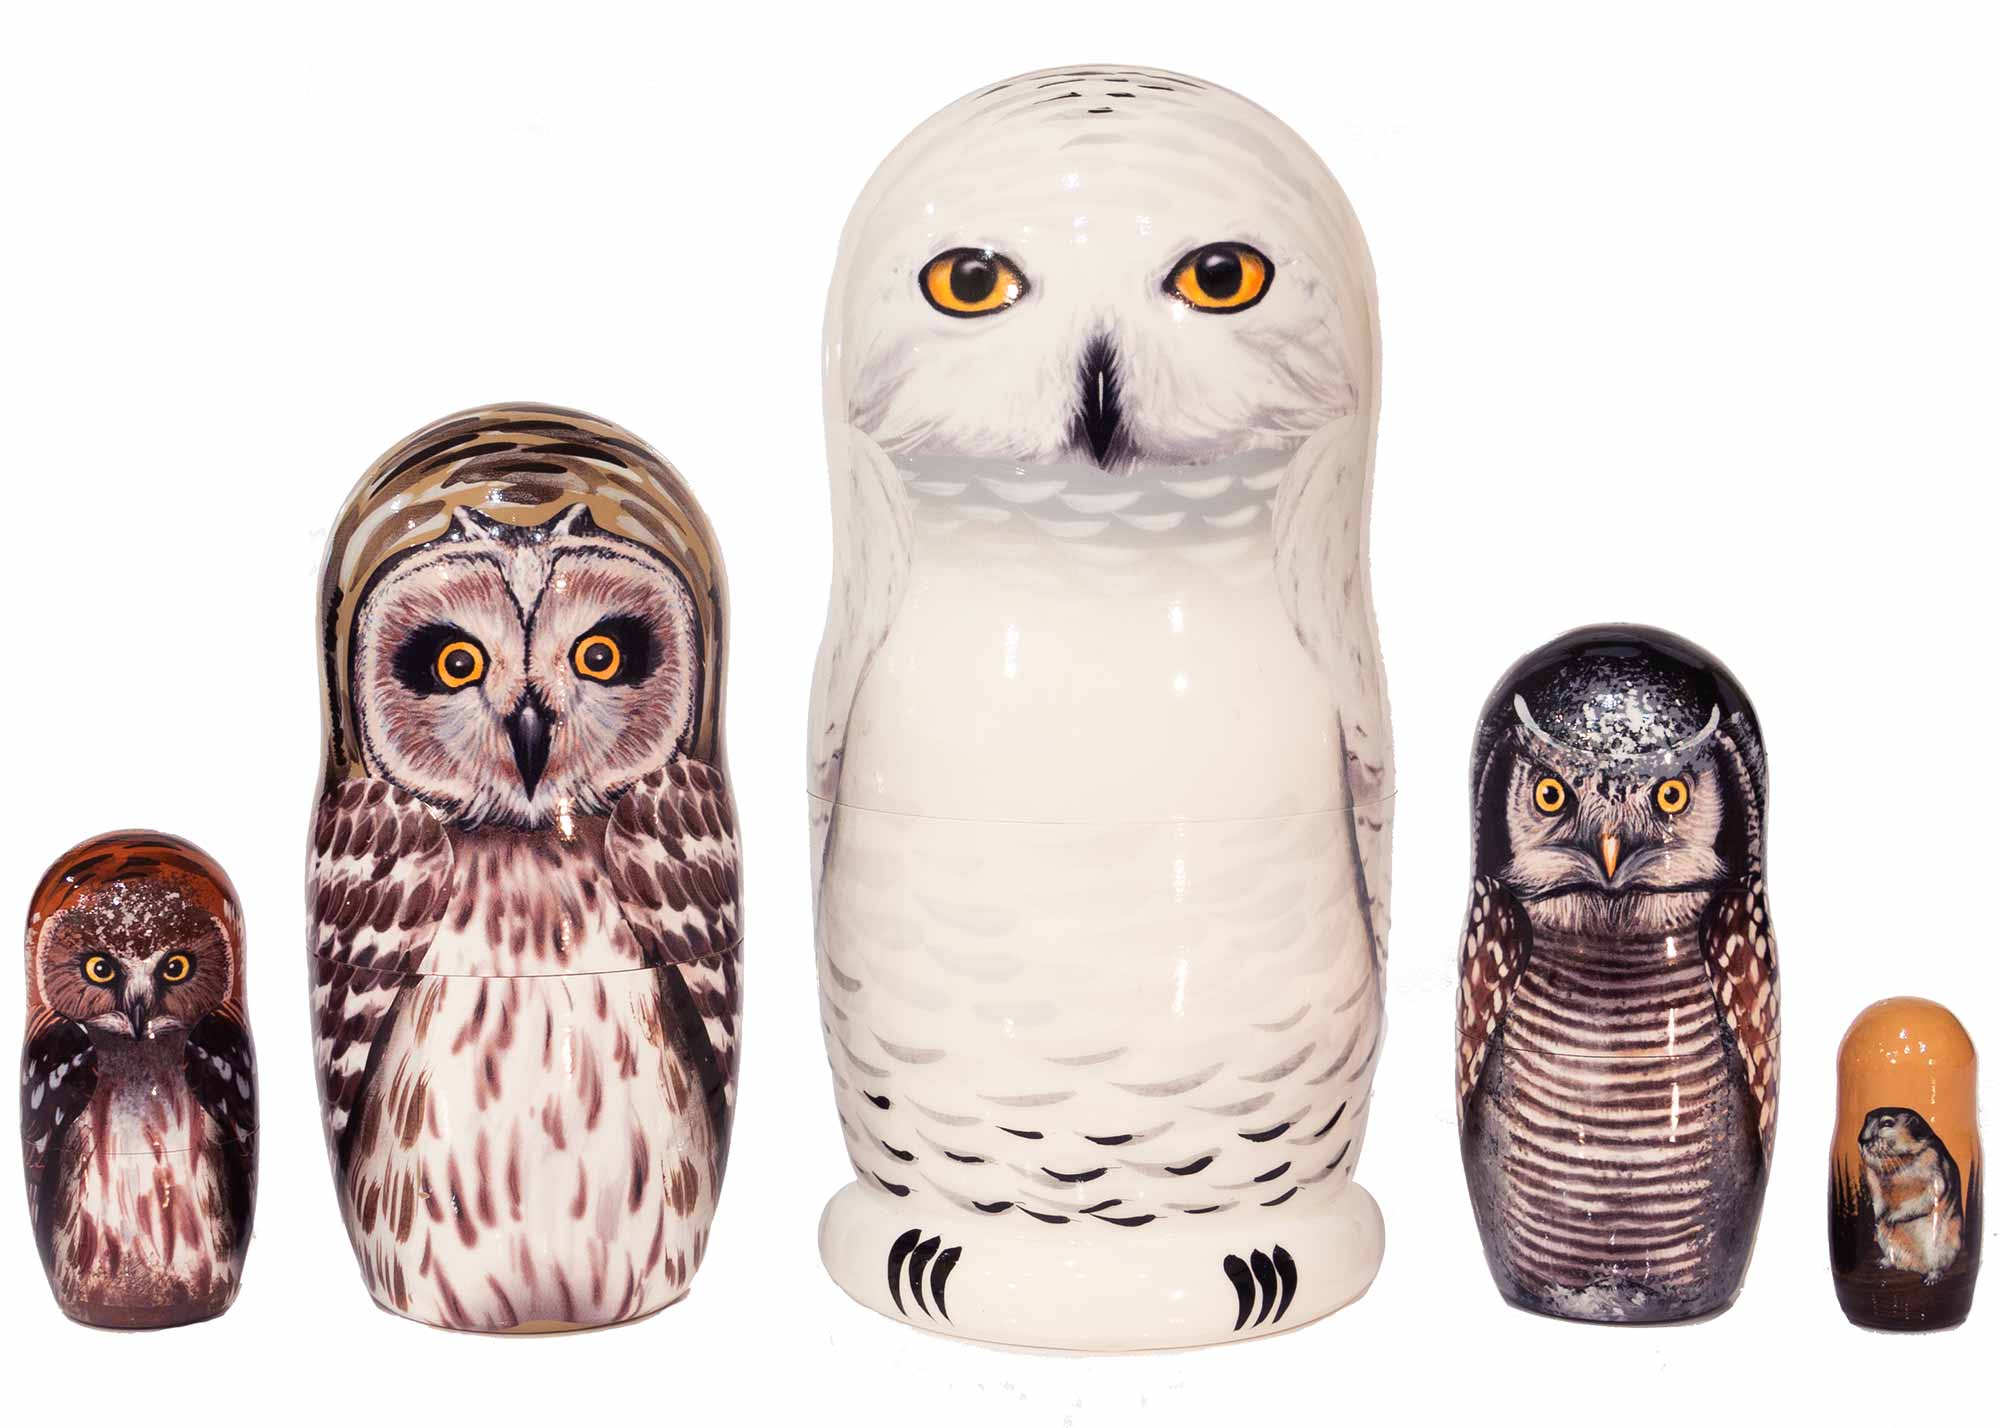 Buy Snowy Owl Nesting Doll 5pc./6" at GoldenCockerel.com